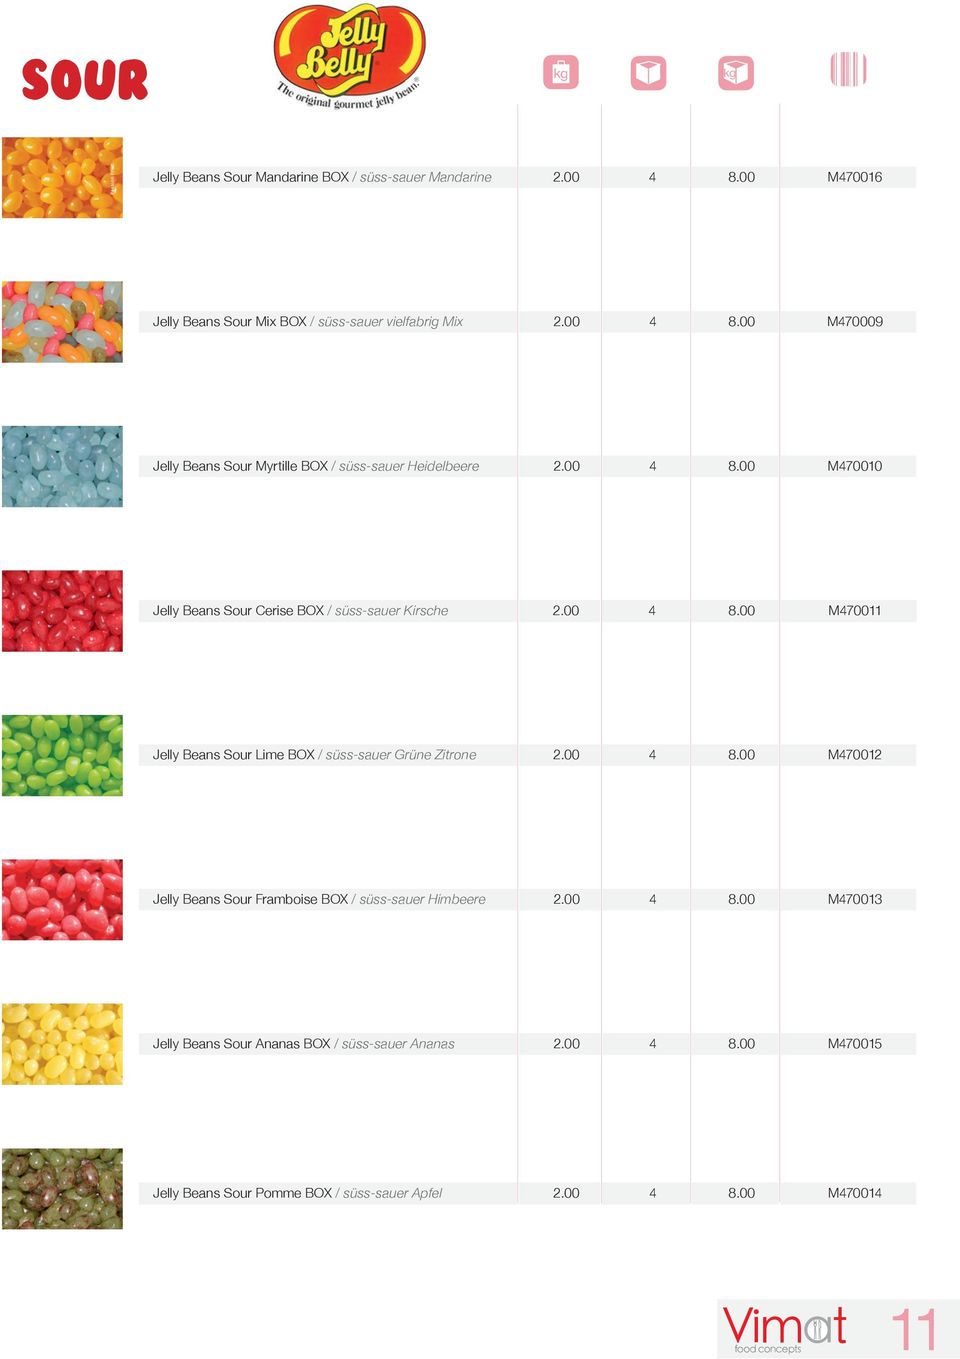 00 4 8.00 M470013 Jelly Beans Sour Ananas BOX / süss-sauer Ananas 2.00 4 8.00 M470015 Jelly Beans Sour Pomme BOX / süss-sauer Apfel 2.00 4 8.00 M470014 mat 11 Vfood concepts